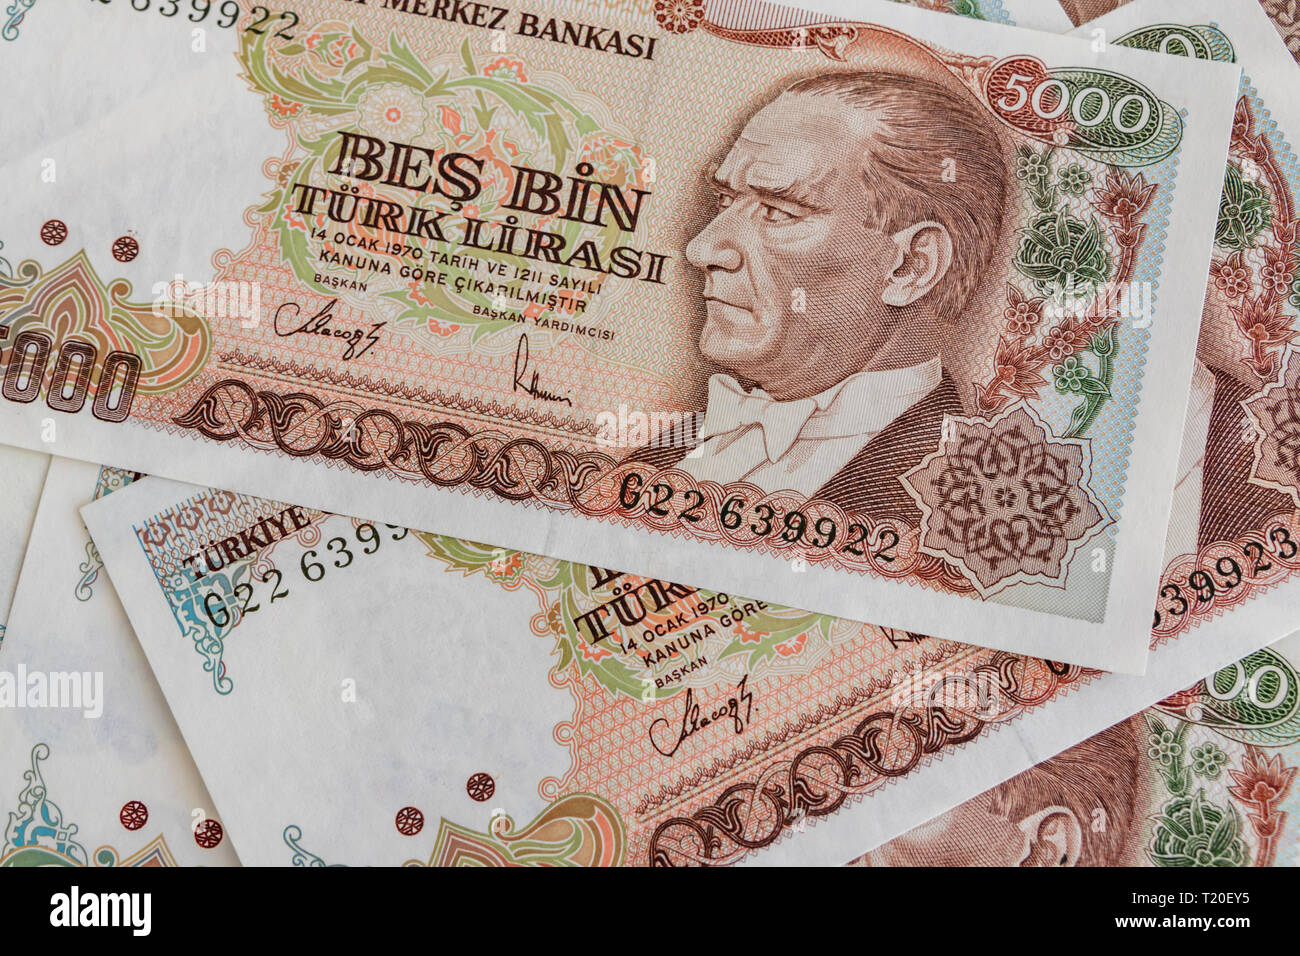 T me bank notes. Старые турецкие банкноты. 5000 Лир банкнота.